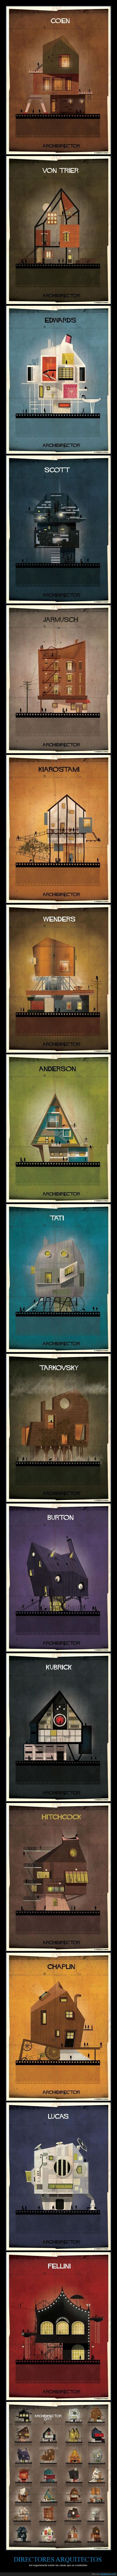 arquitecto,arquitectura,burton,casas,Chaplin,coen,construcción,edificio,Fellini,kubrick